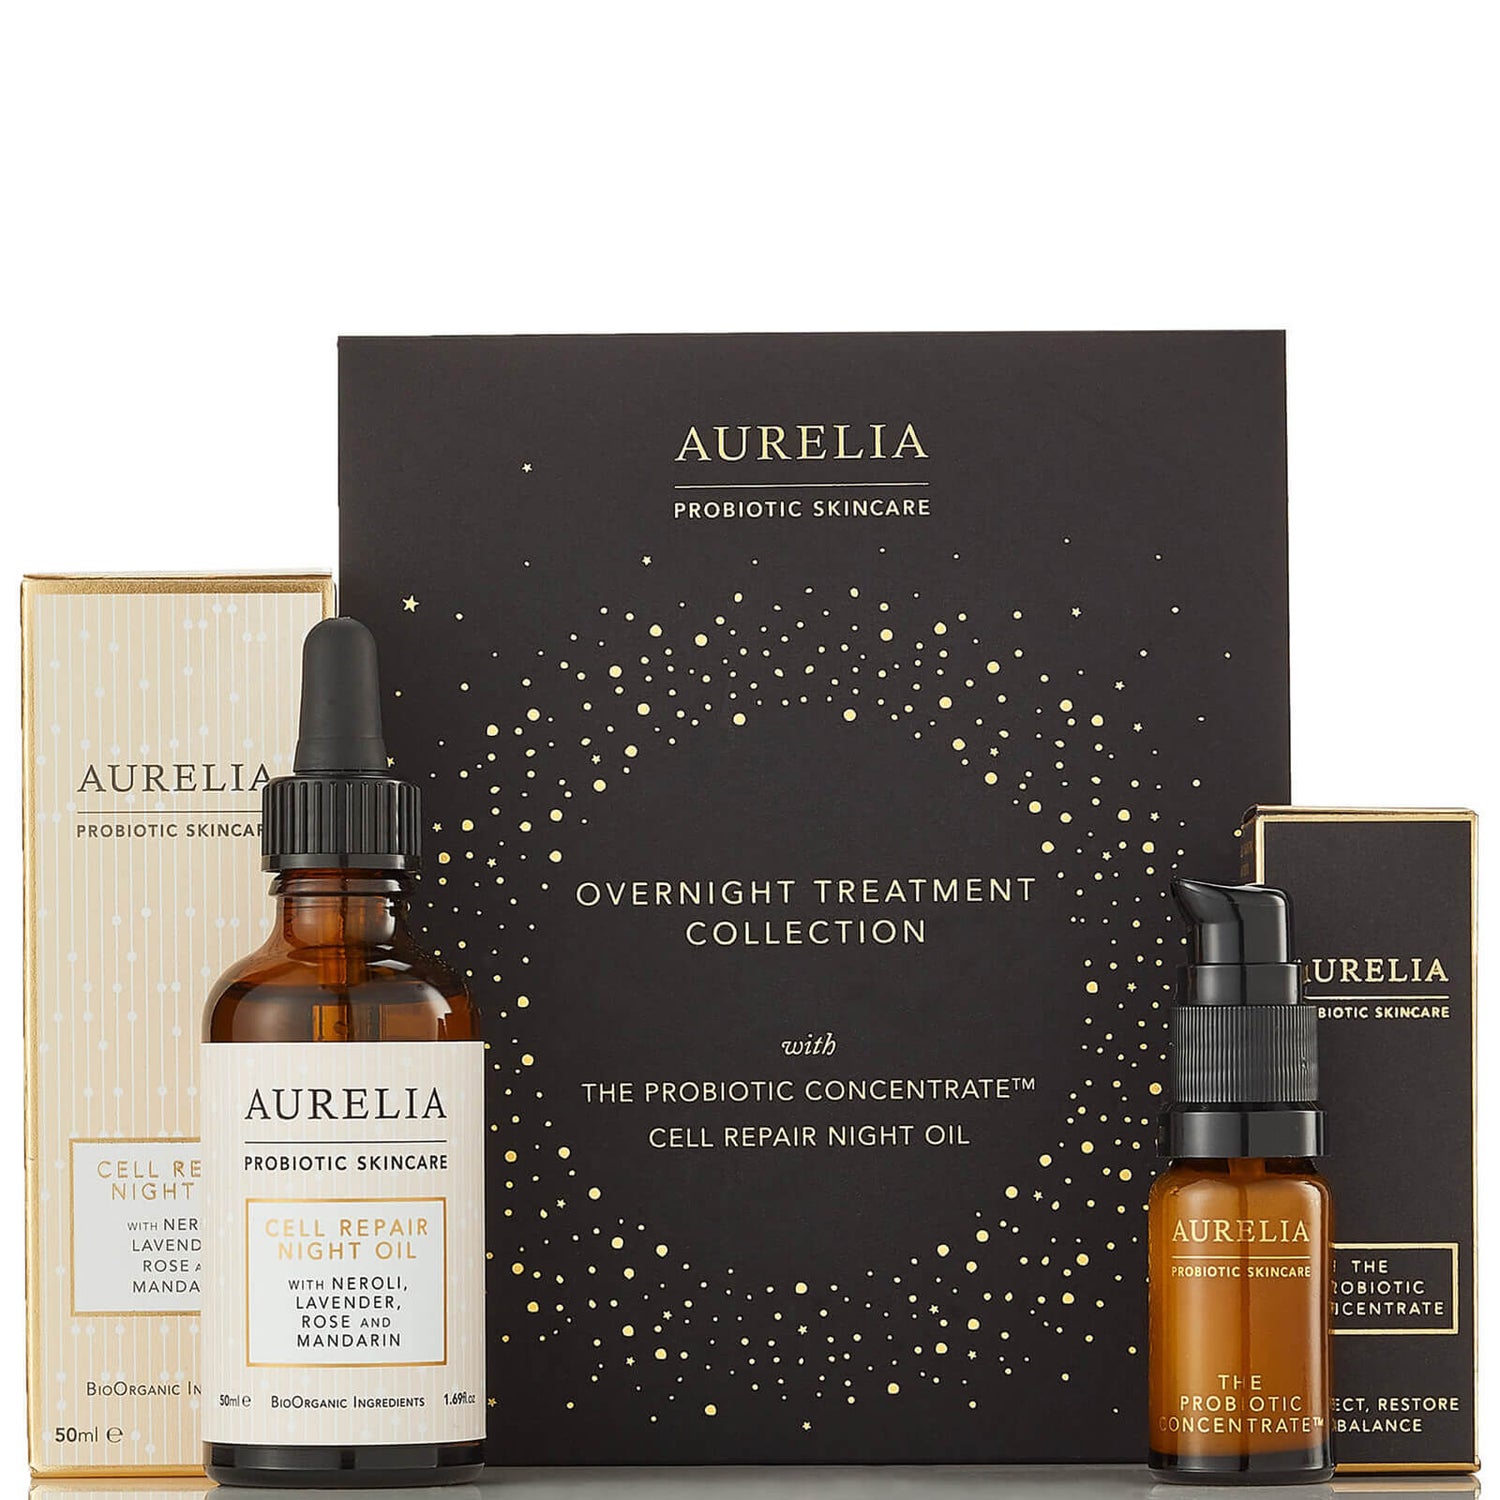 Aurelia Probiotic Skincare オーバーナイト トリートメント コレクション 60ml